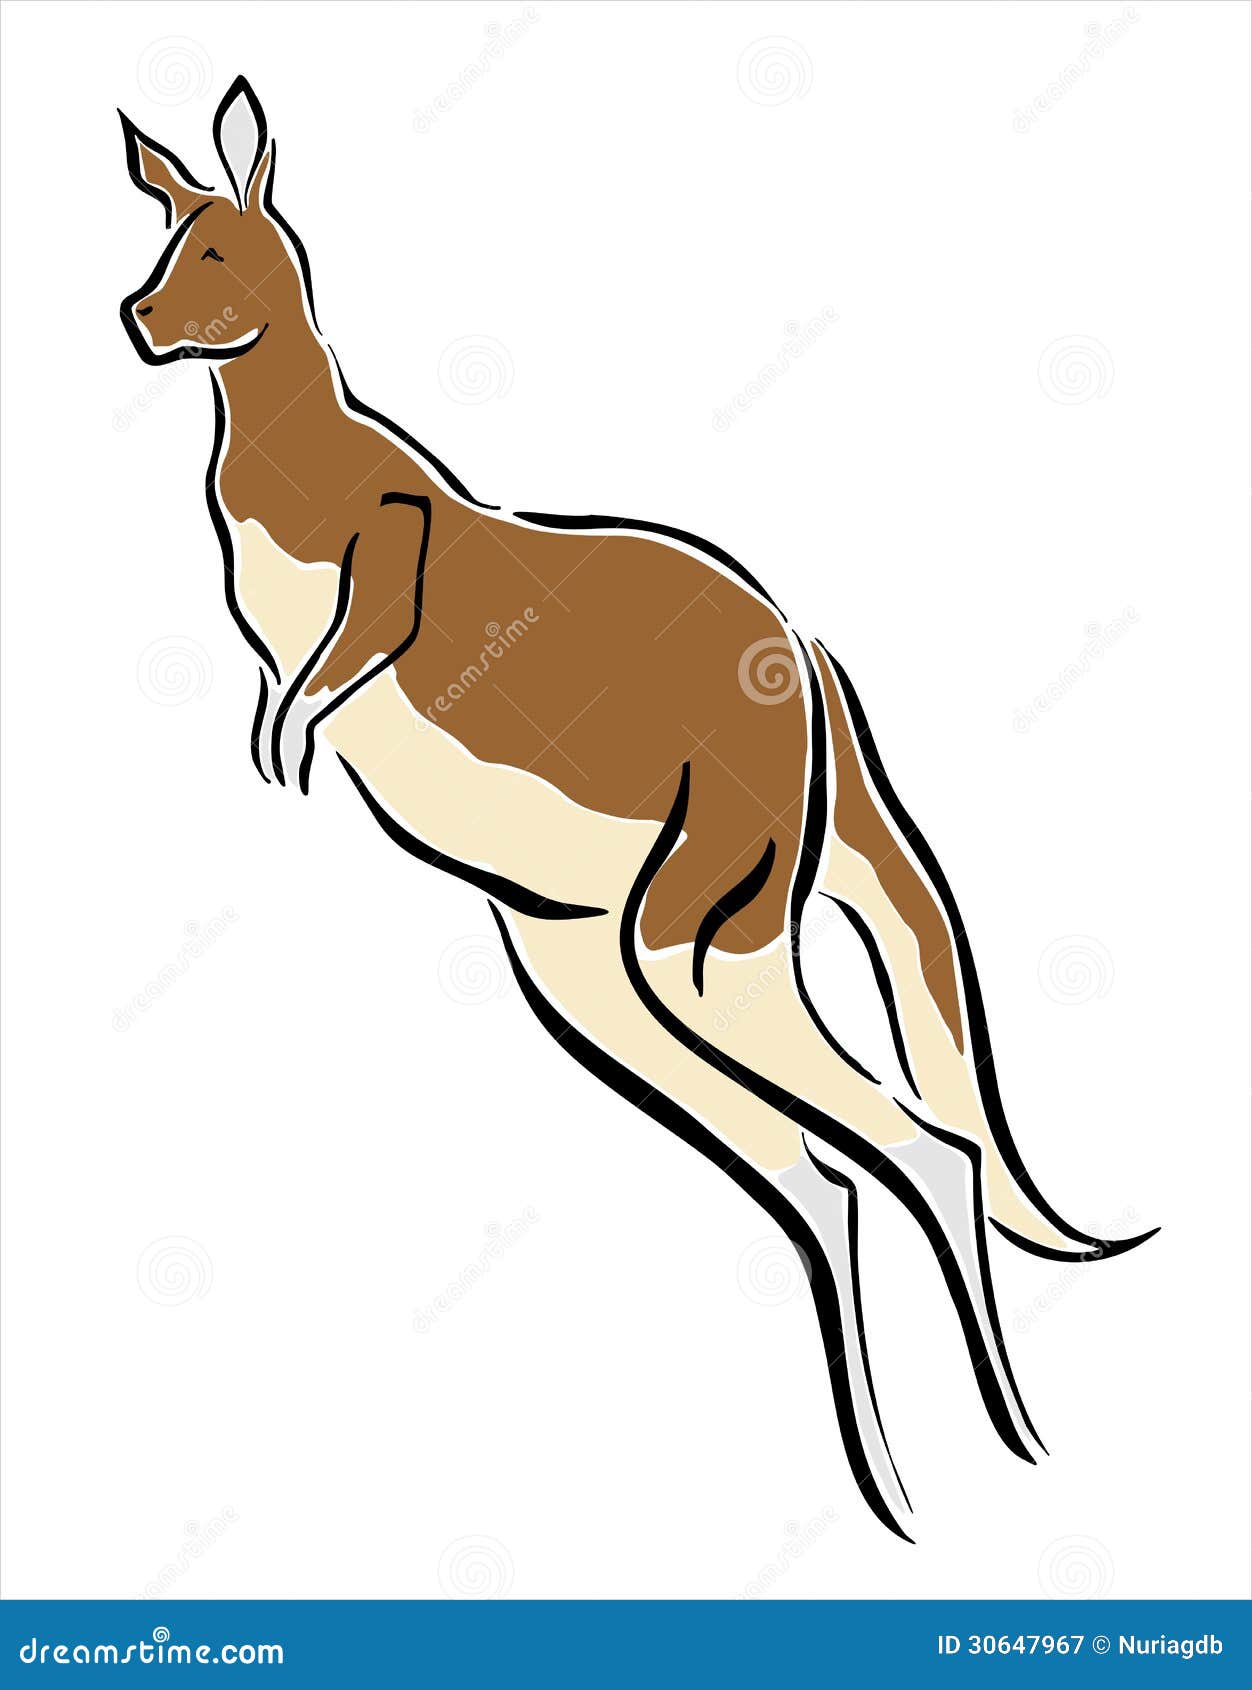 kangaroo jumping clipart - photo #35